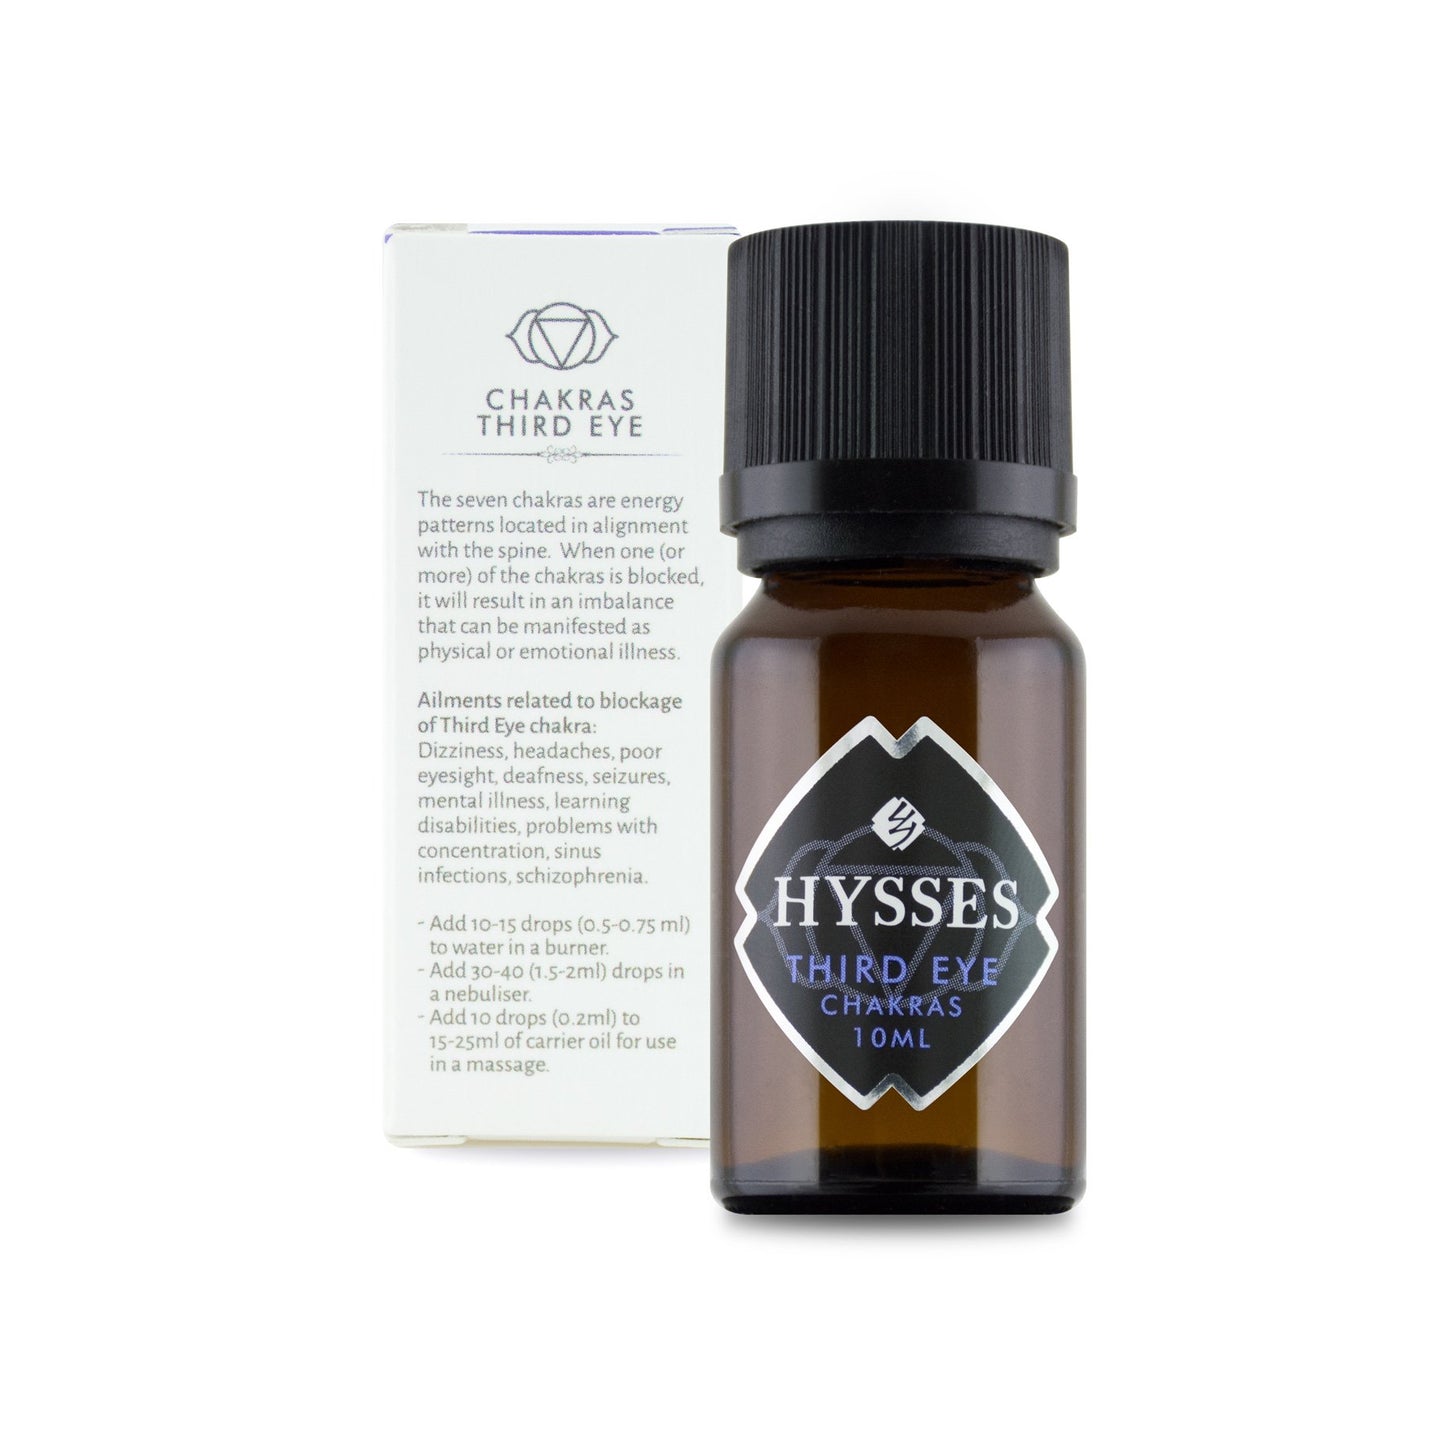 Hysses Essential Oils, Chakras Collection 10ml - Third Eye